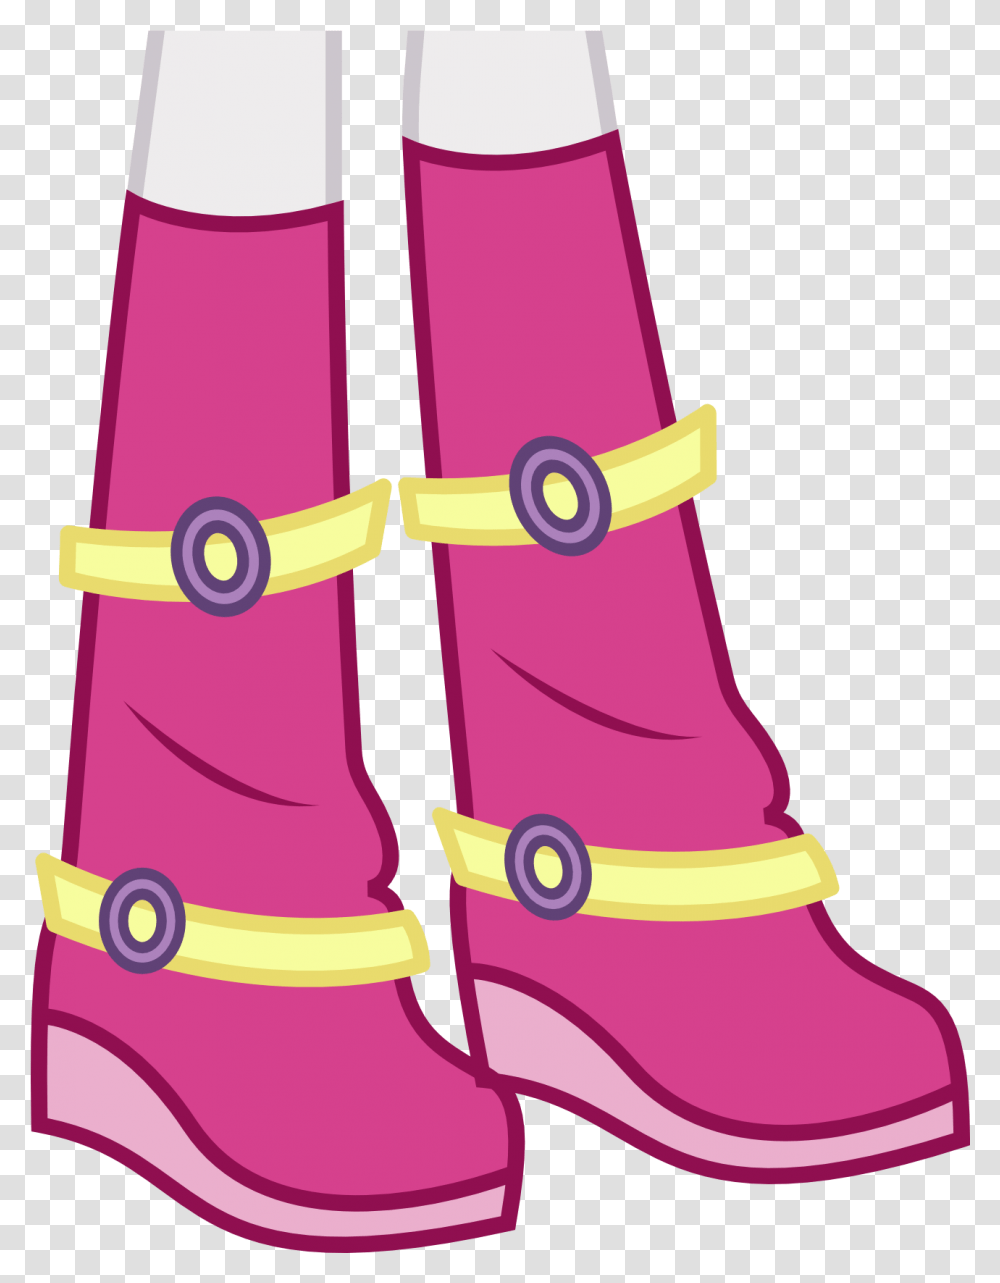 Sweetie Belle S Boots 2 Clipart Download Sviti Bel Devushka Ekvestrii, Apparel, Footwear Transparent Png